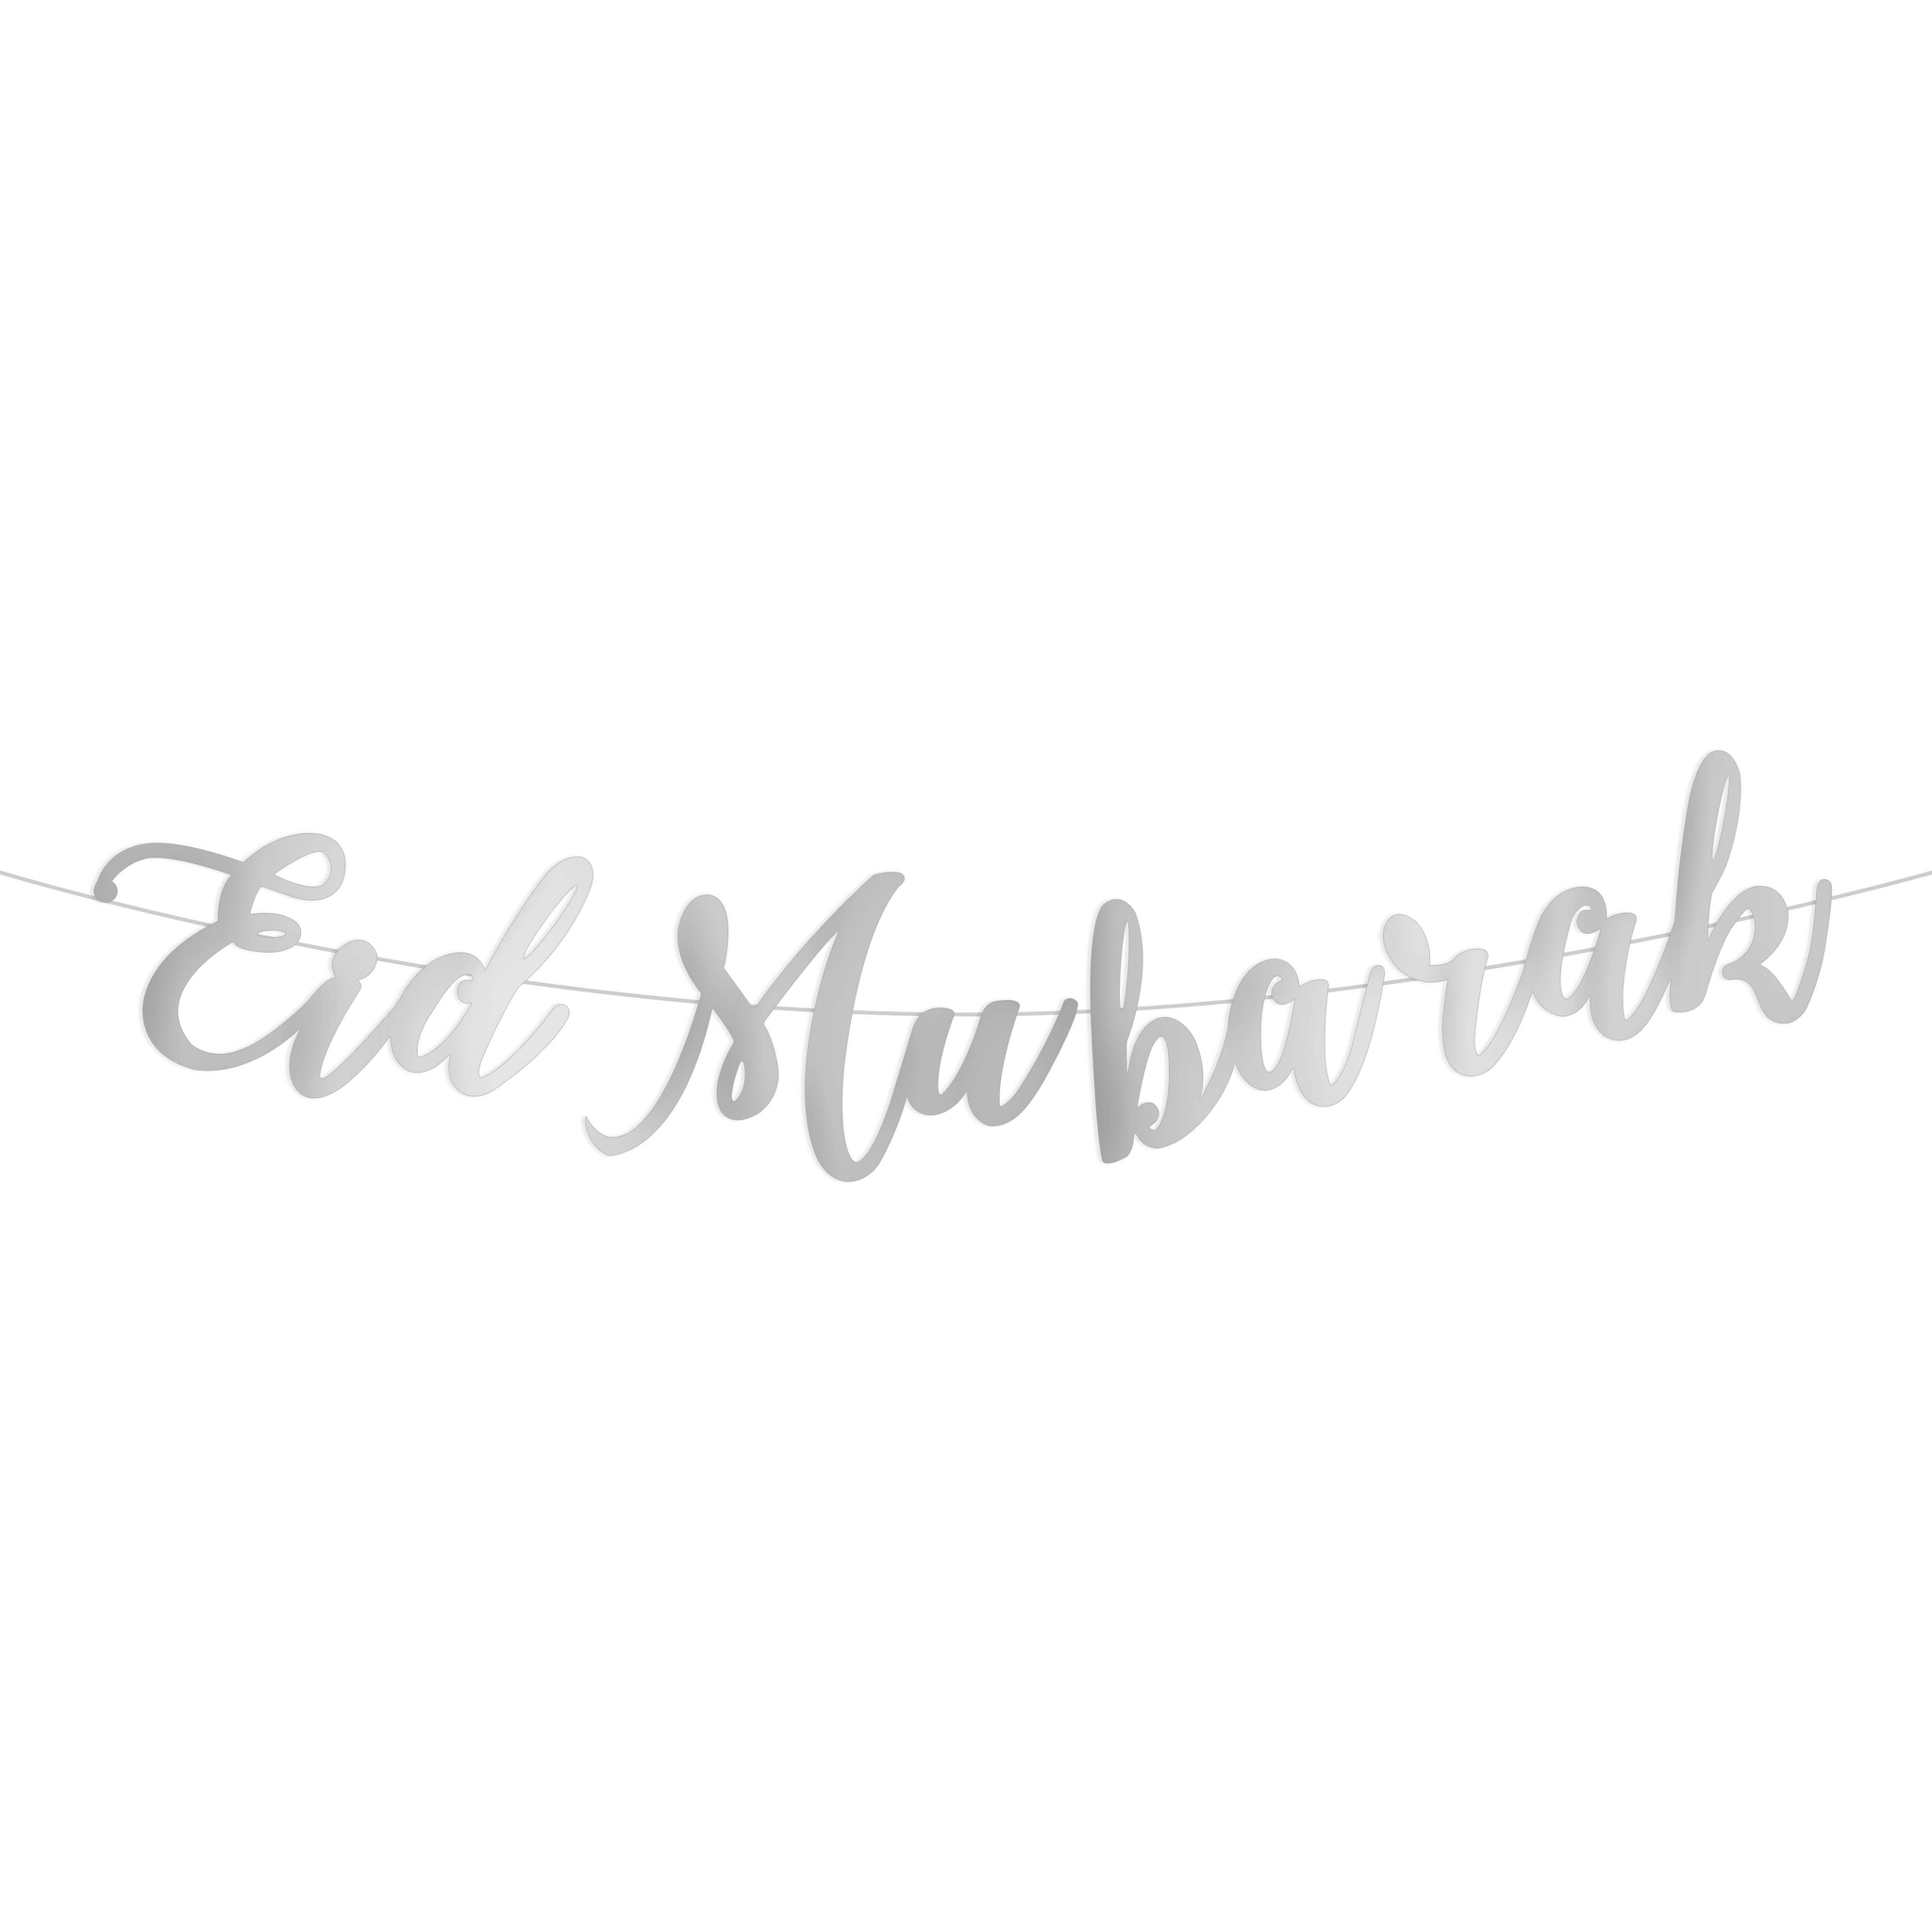 Letter bunting "Eid Mubarak" -silver